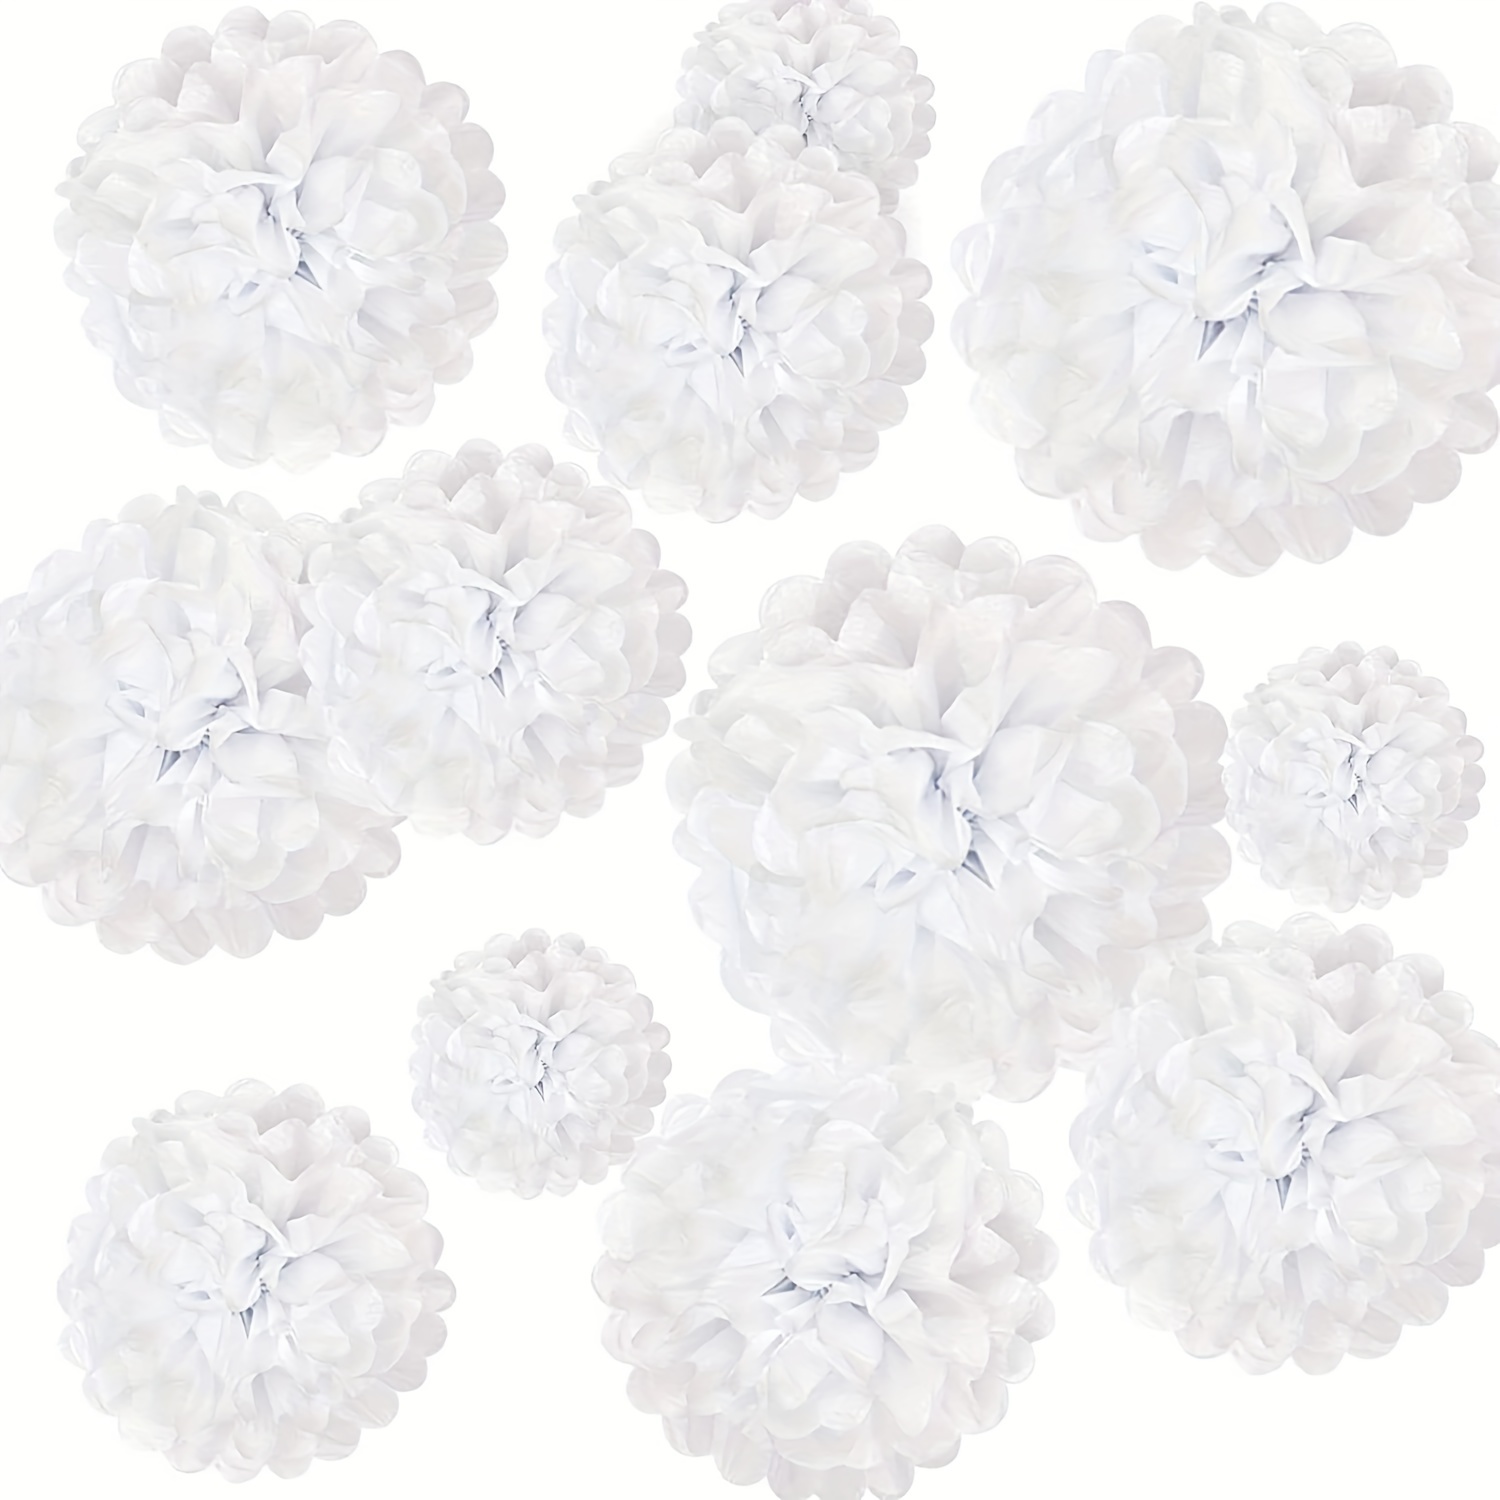 12 Dark Green Tissue Paper Pom Poms Flowers Balls, Decorations (4